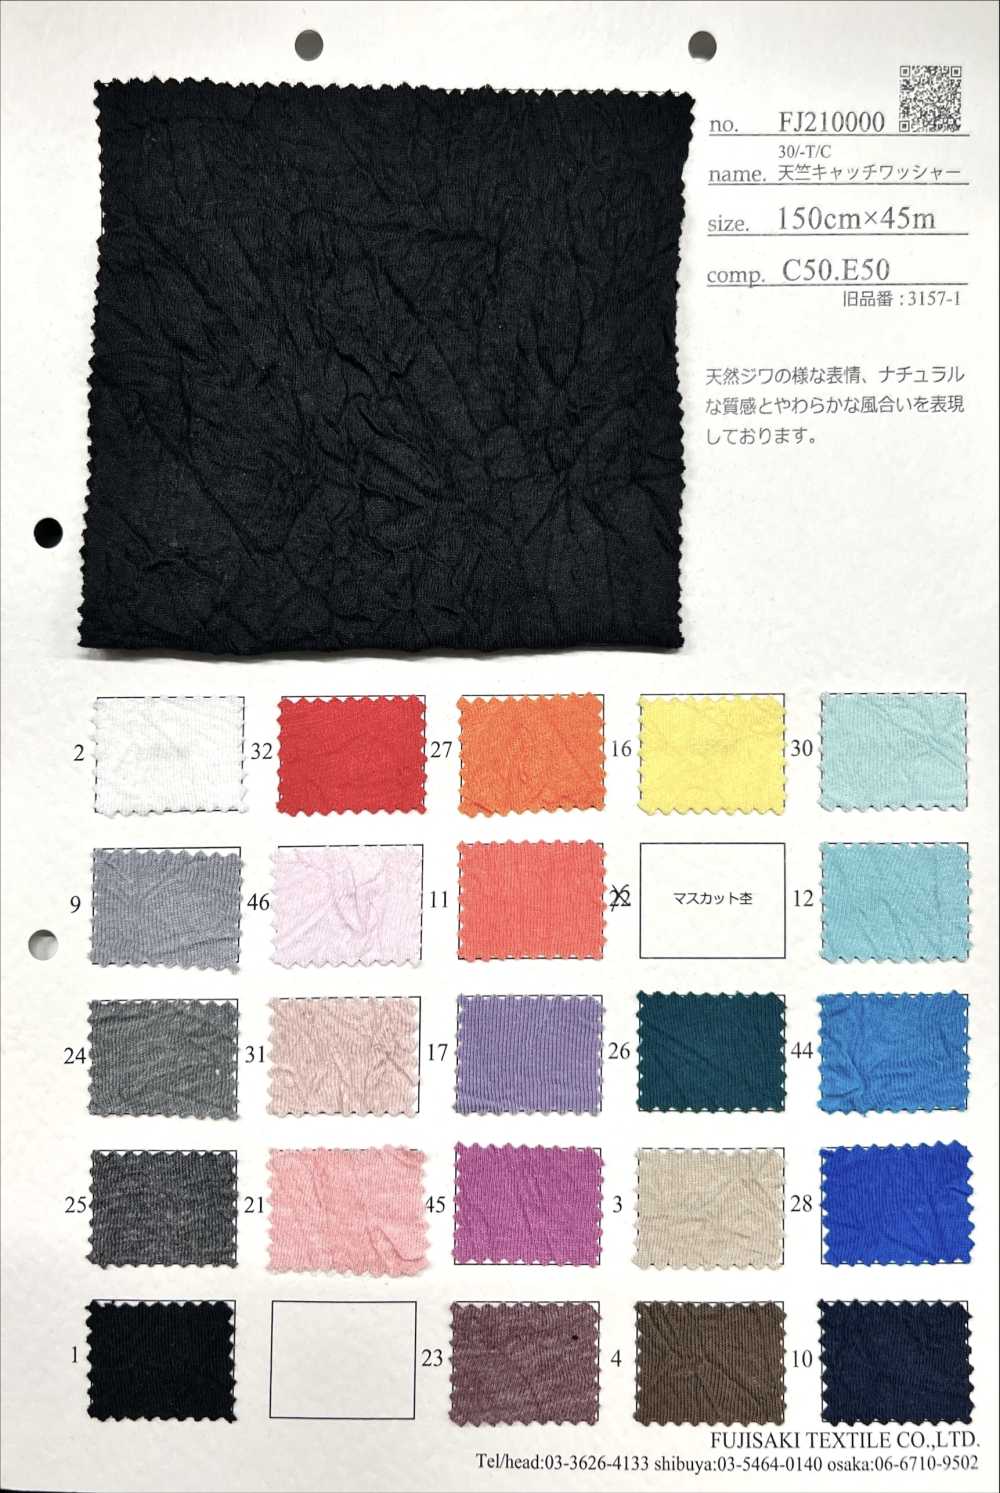 FJ210000 30/-T/C Jersey Catch Washer Processing[Textile / Fabric] Fujisaki Textile